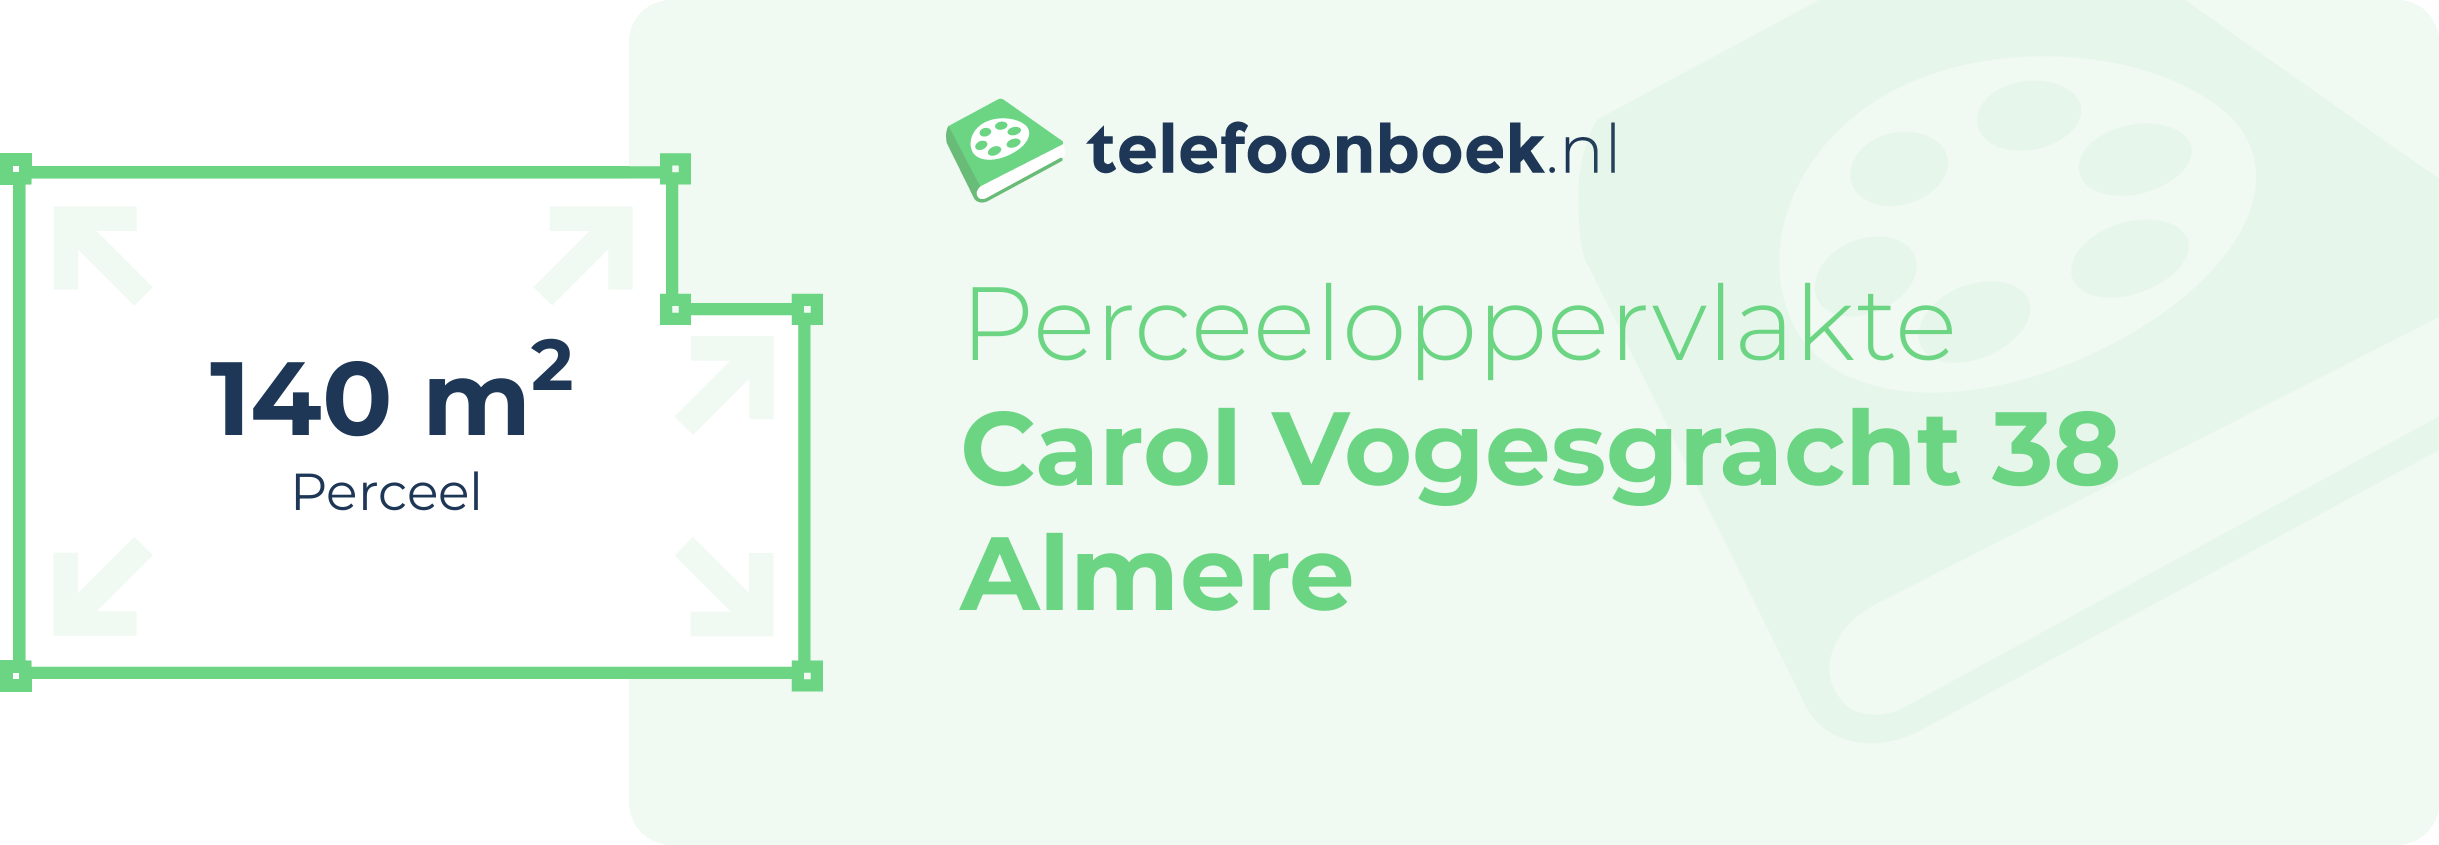 Perceeloppervlakte Carol Vogesgracht 38 Almere